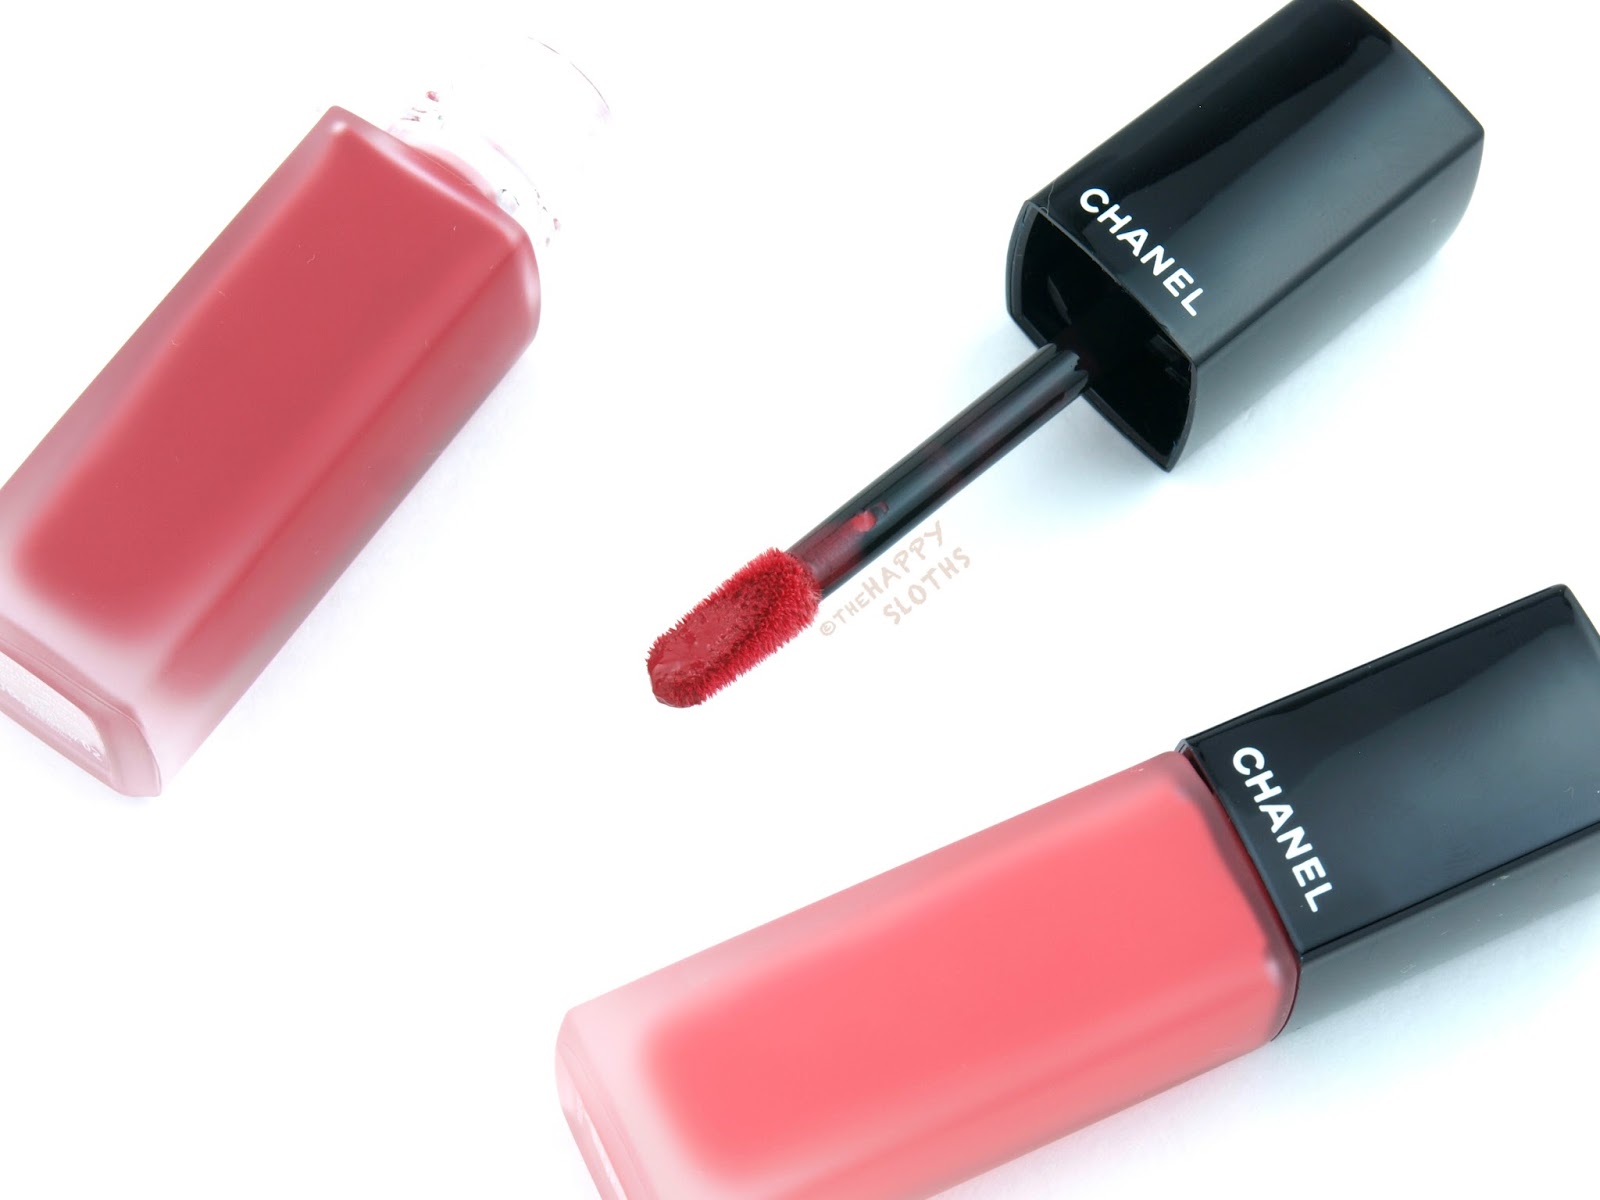 Chanel Rouge Allure Ink Matte Liquid Lip Color in 142 Creatif